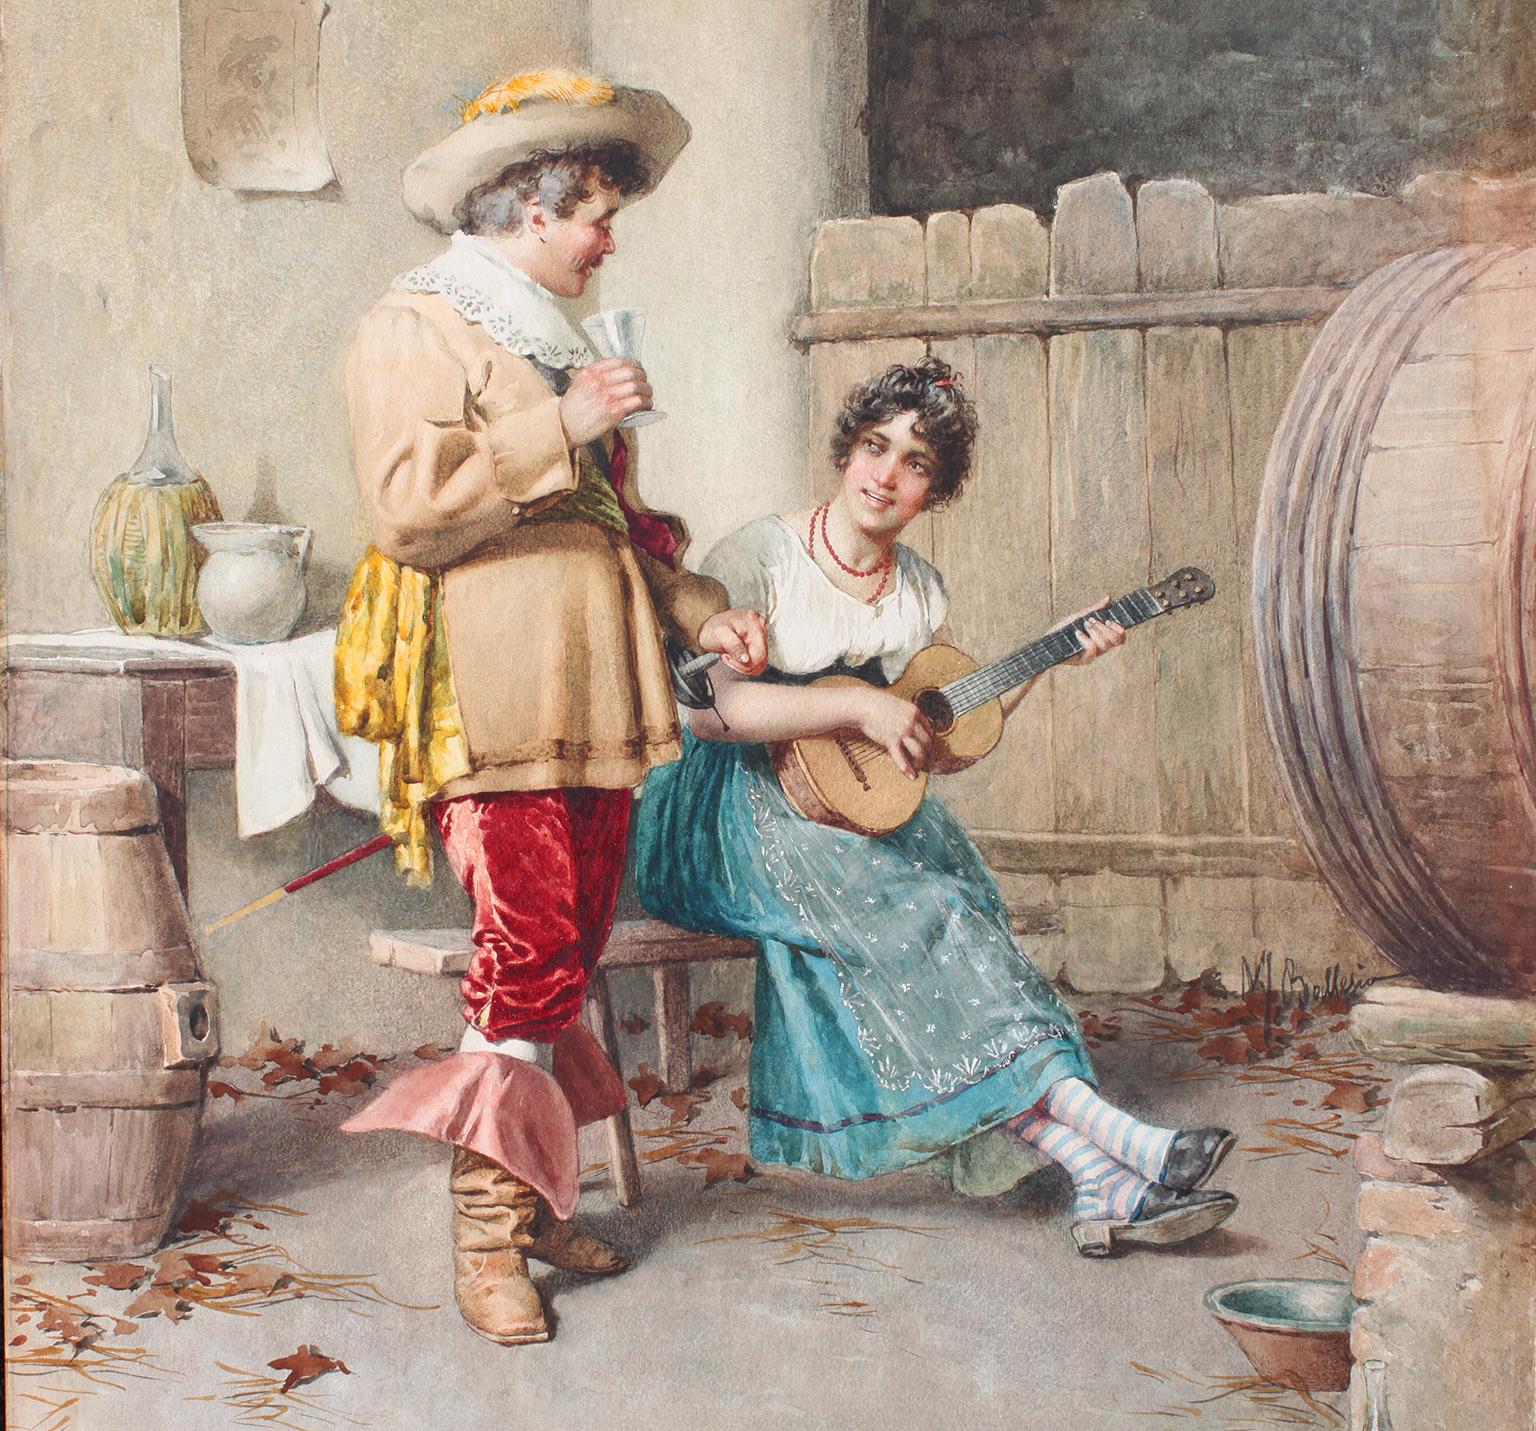 Country Federico Ballesio Attributed 'Italian, 19th Century' Watercolor 